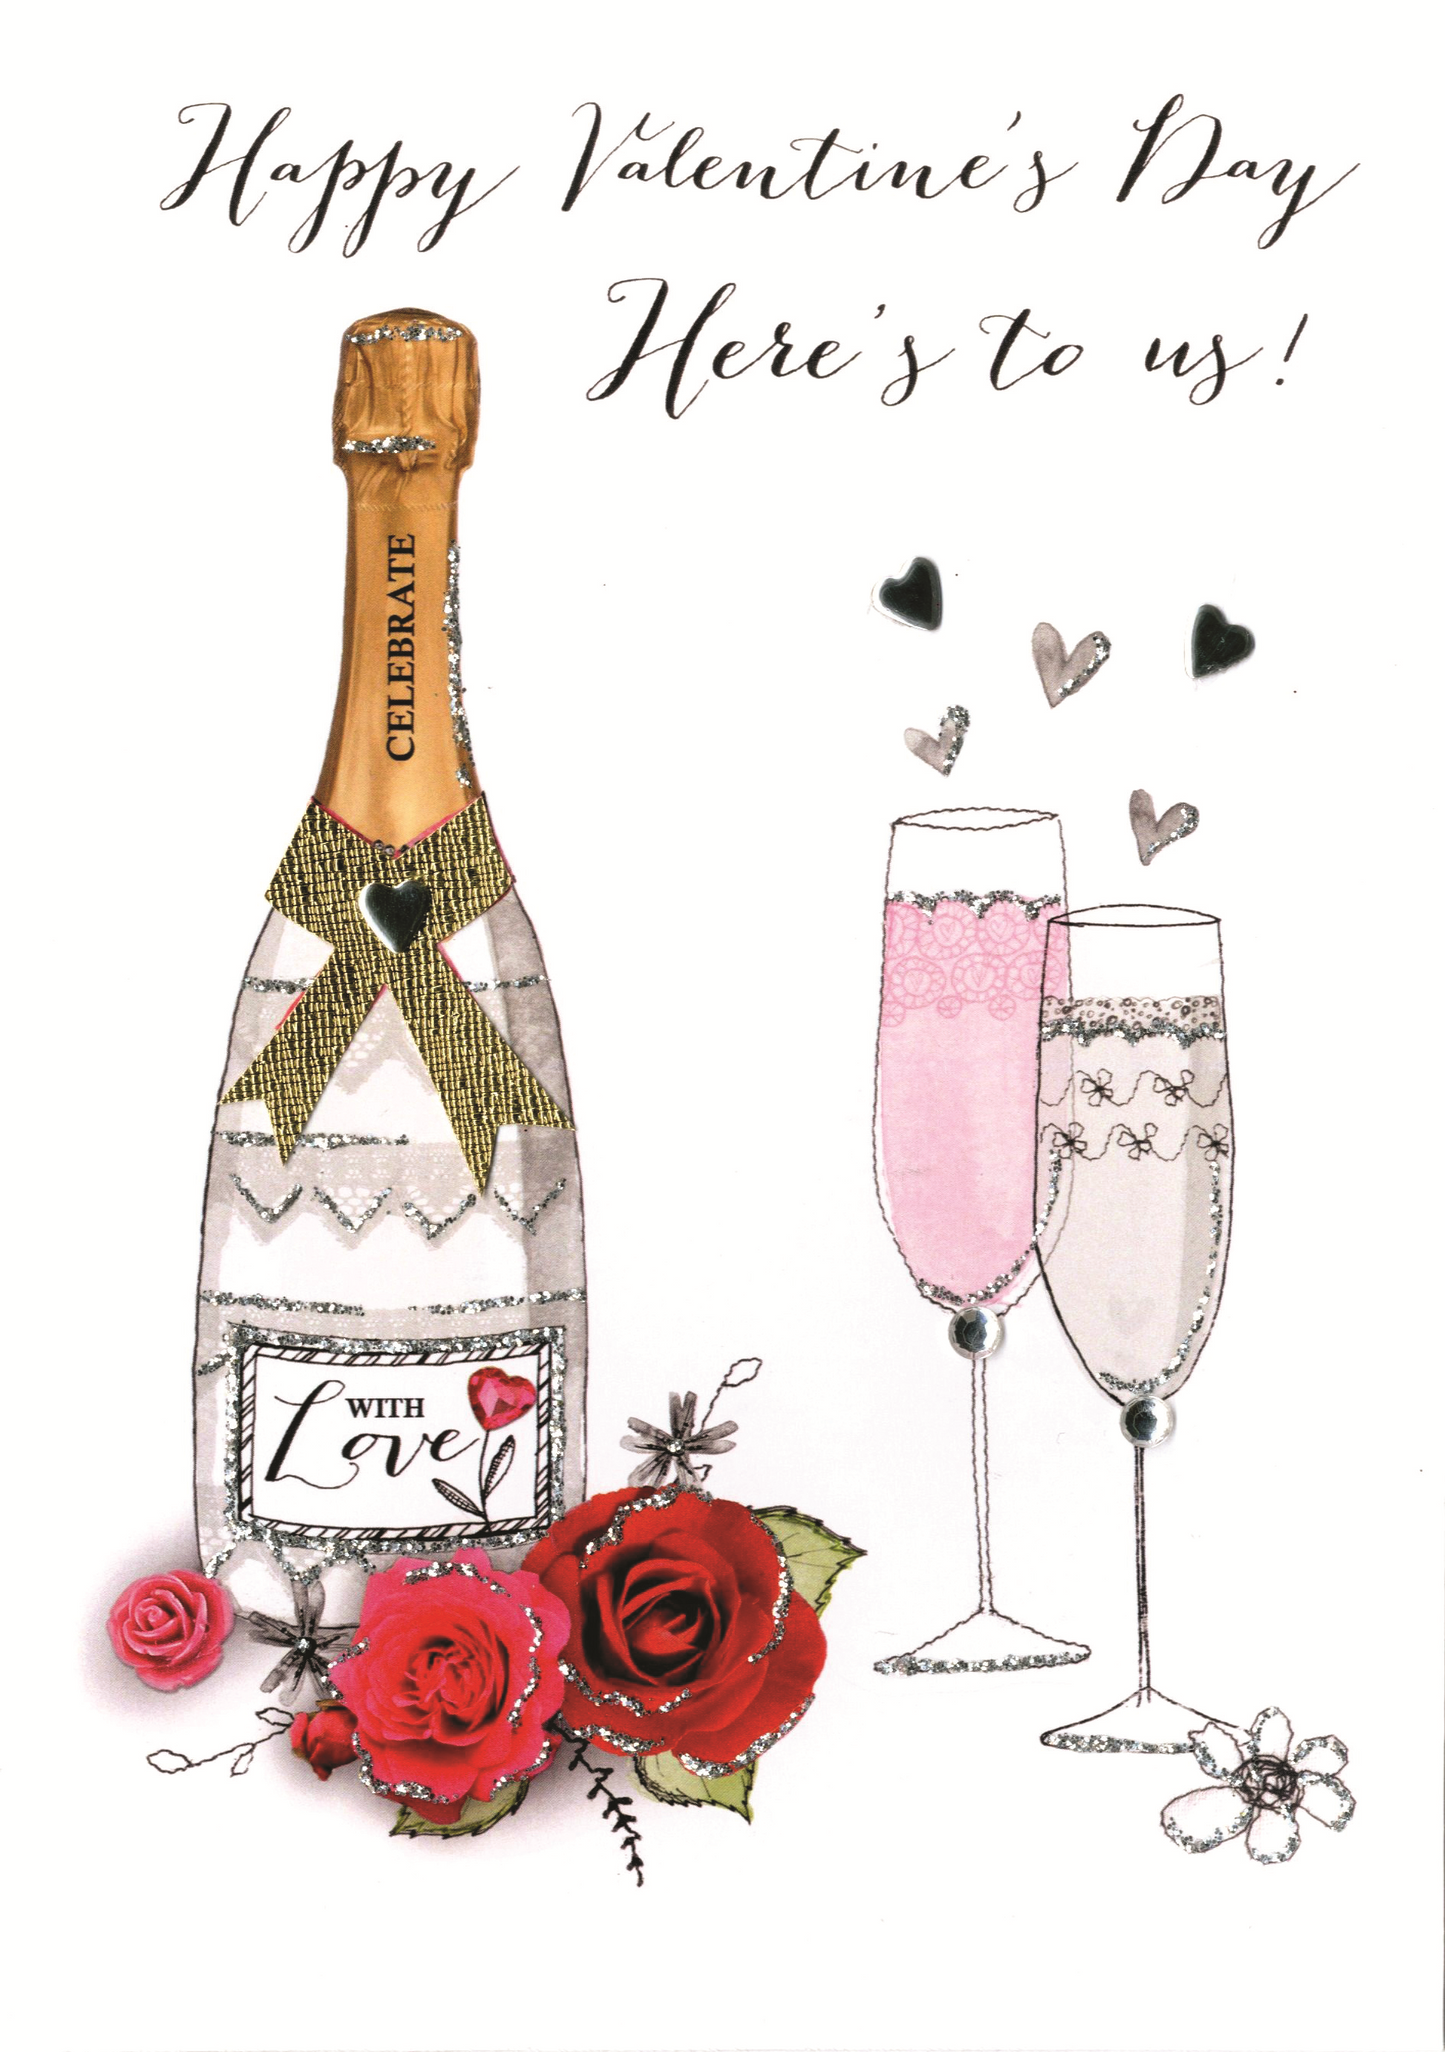 Here's To Us Embellished Joie De Vivre Valentine's Greeting Card